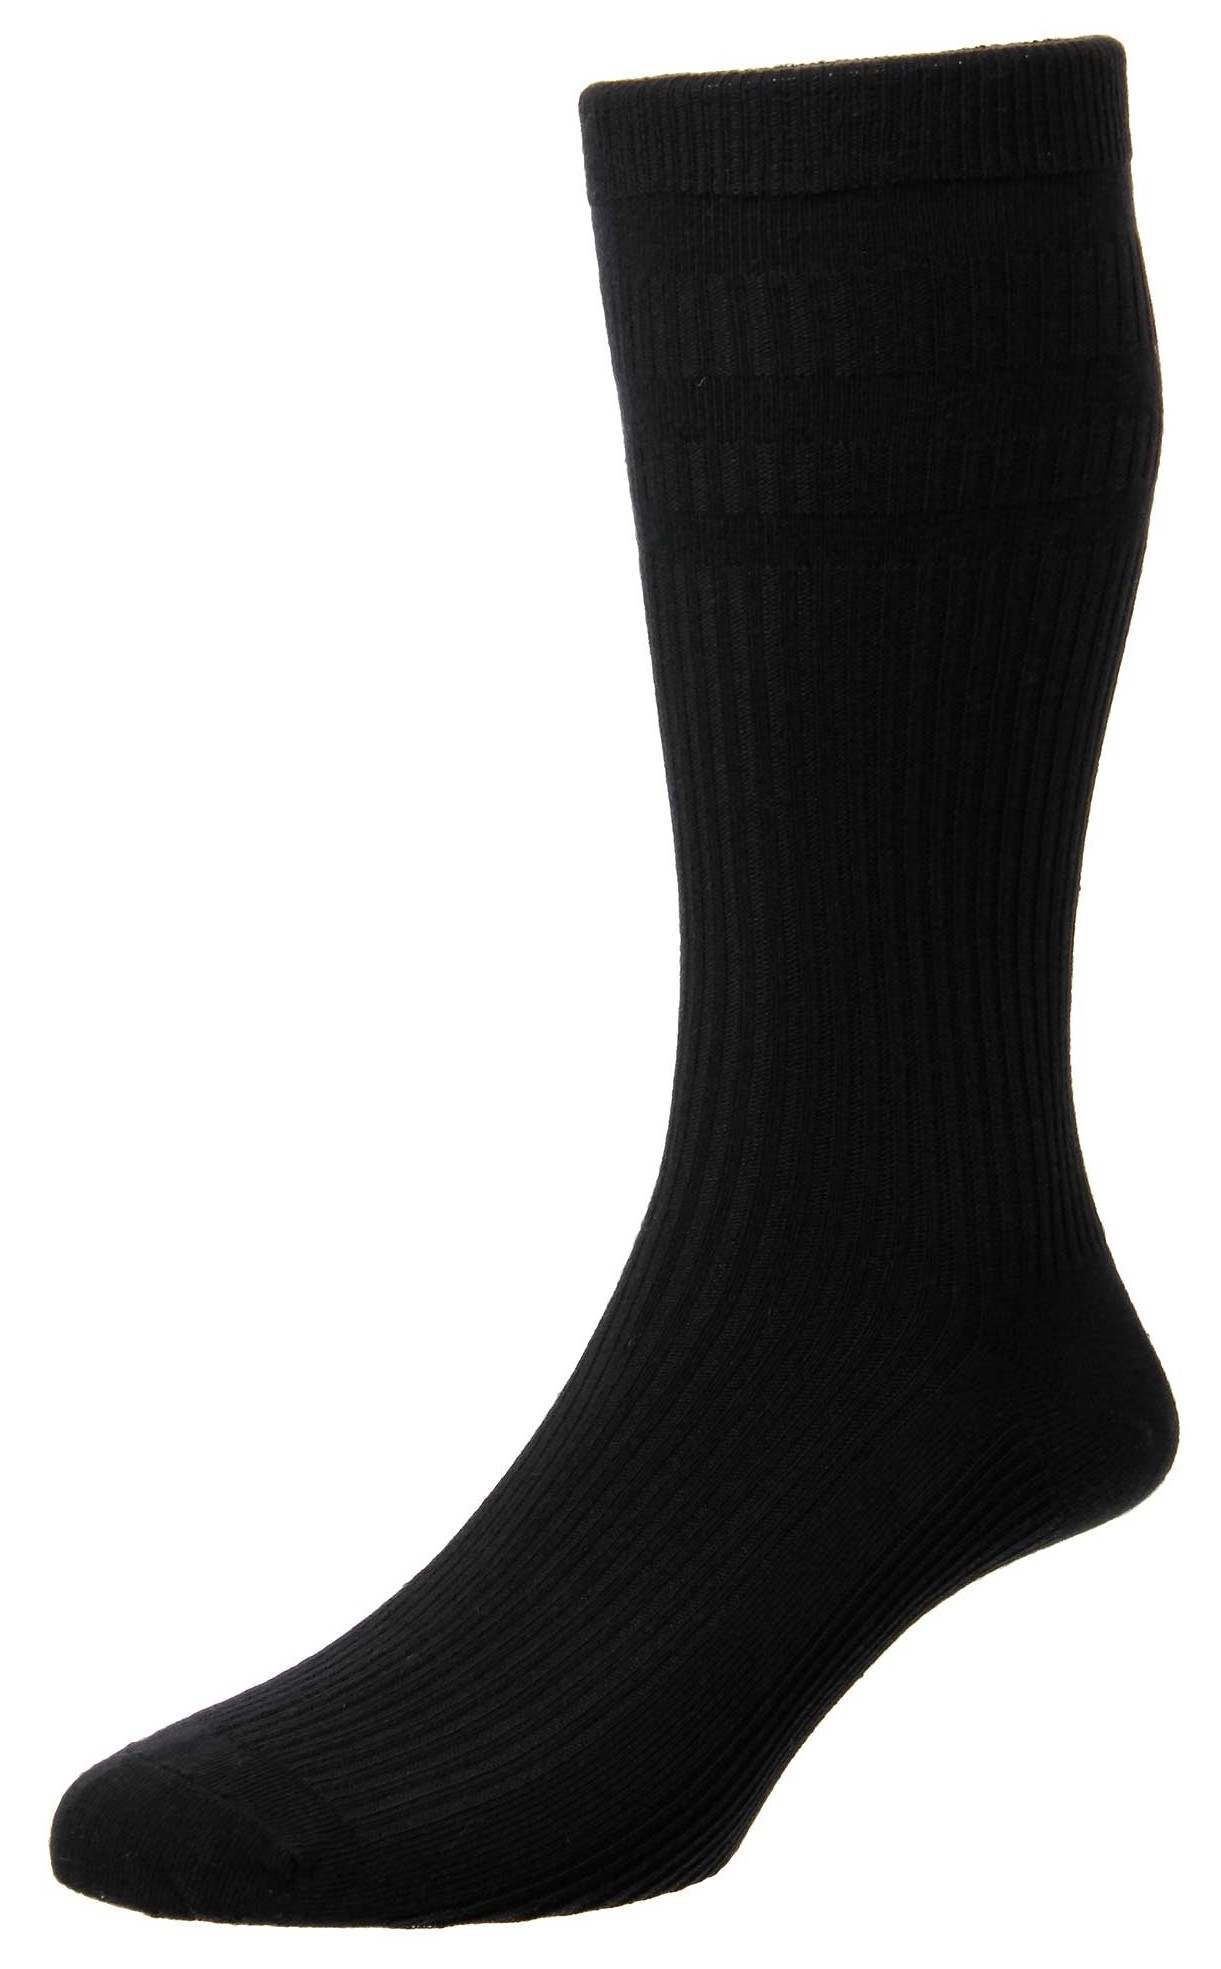 HJ191 Softop Socks Black Shoe size 11-13